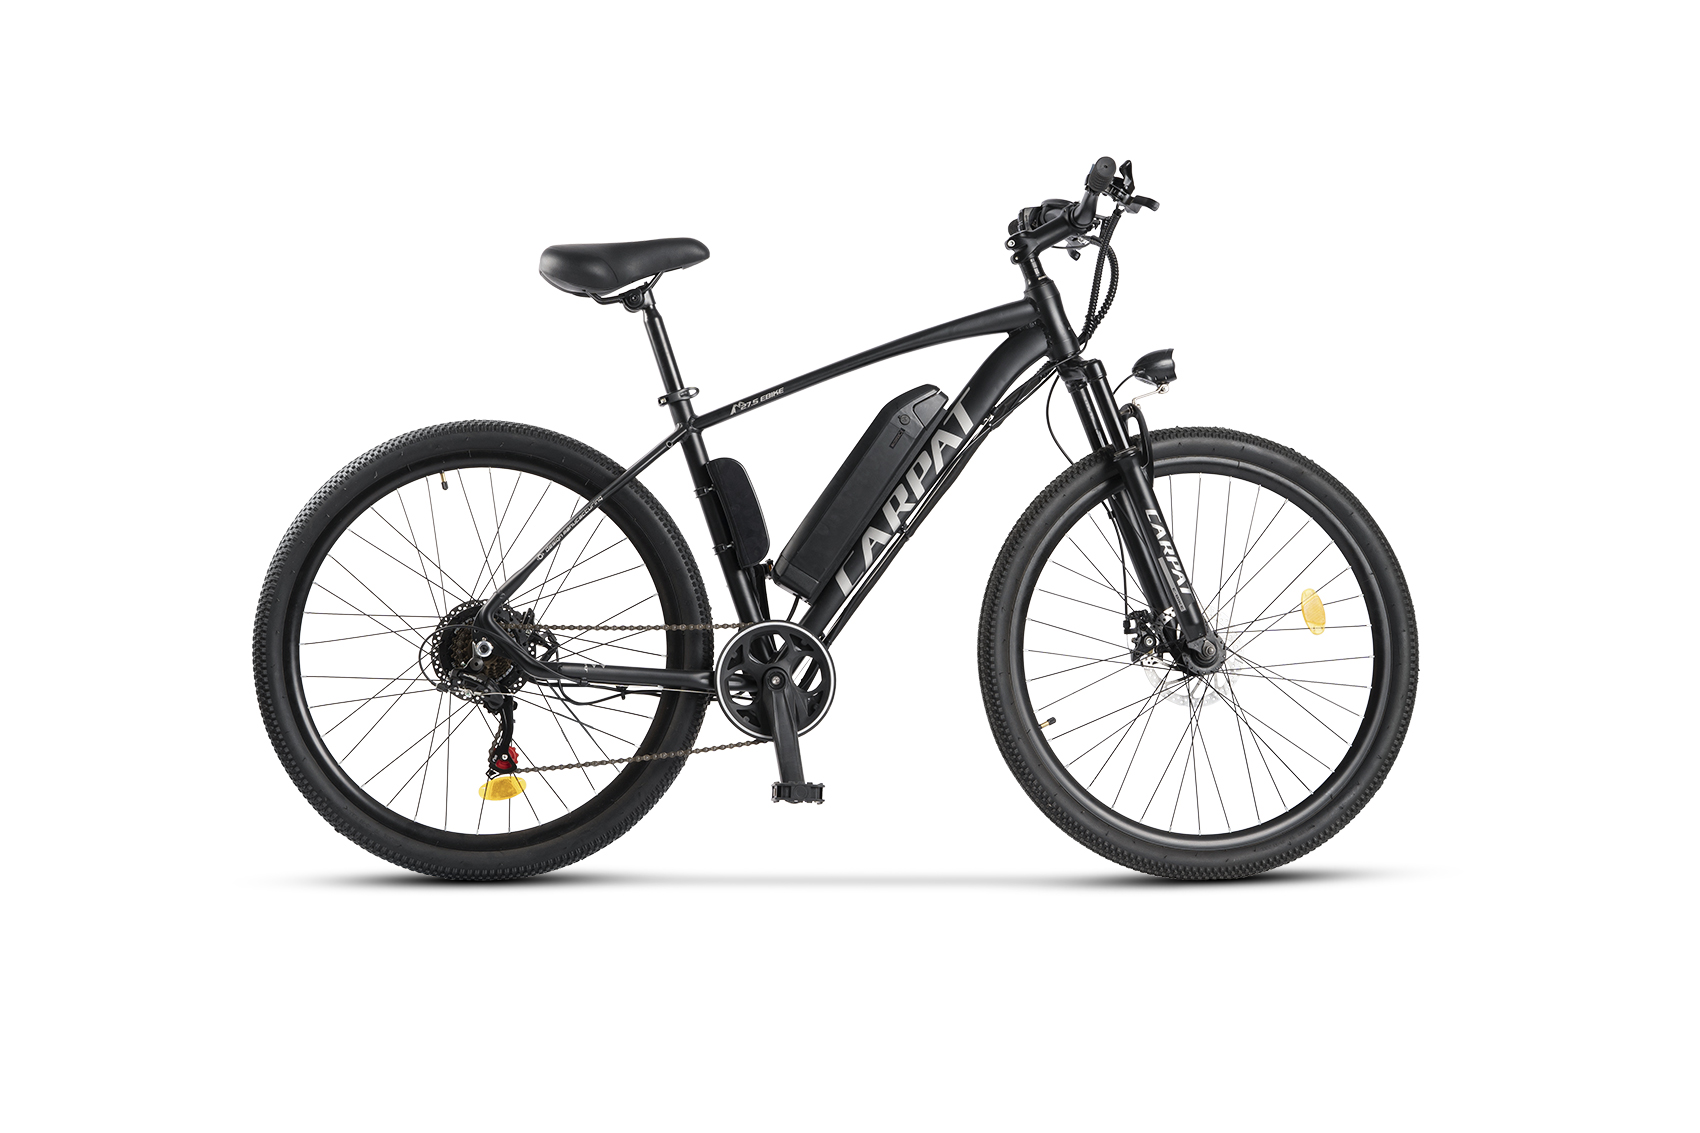 PROMO BICICLETE - Bicicleta Electrica MTB Carpat C275X5E 27.5", Negru, https:carpatsport.ro